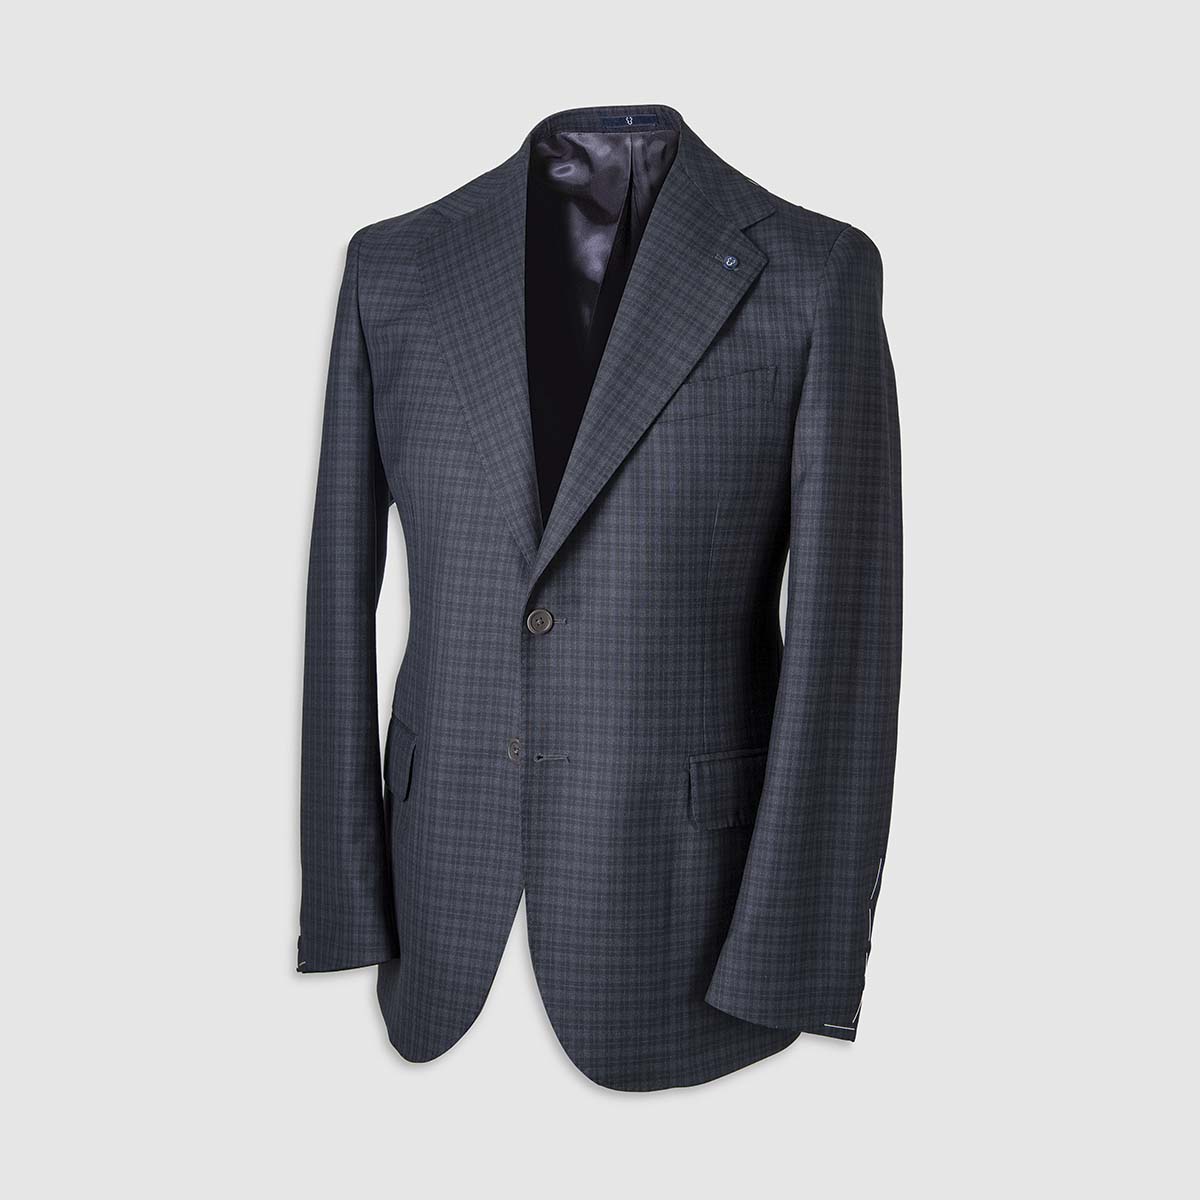 Brò-Saint-Maloù Suit in 130s Four Season Wool Melillo 1970 on sale 2022 2